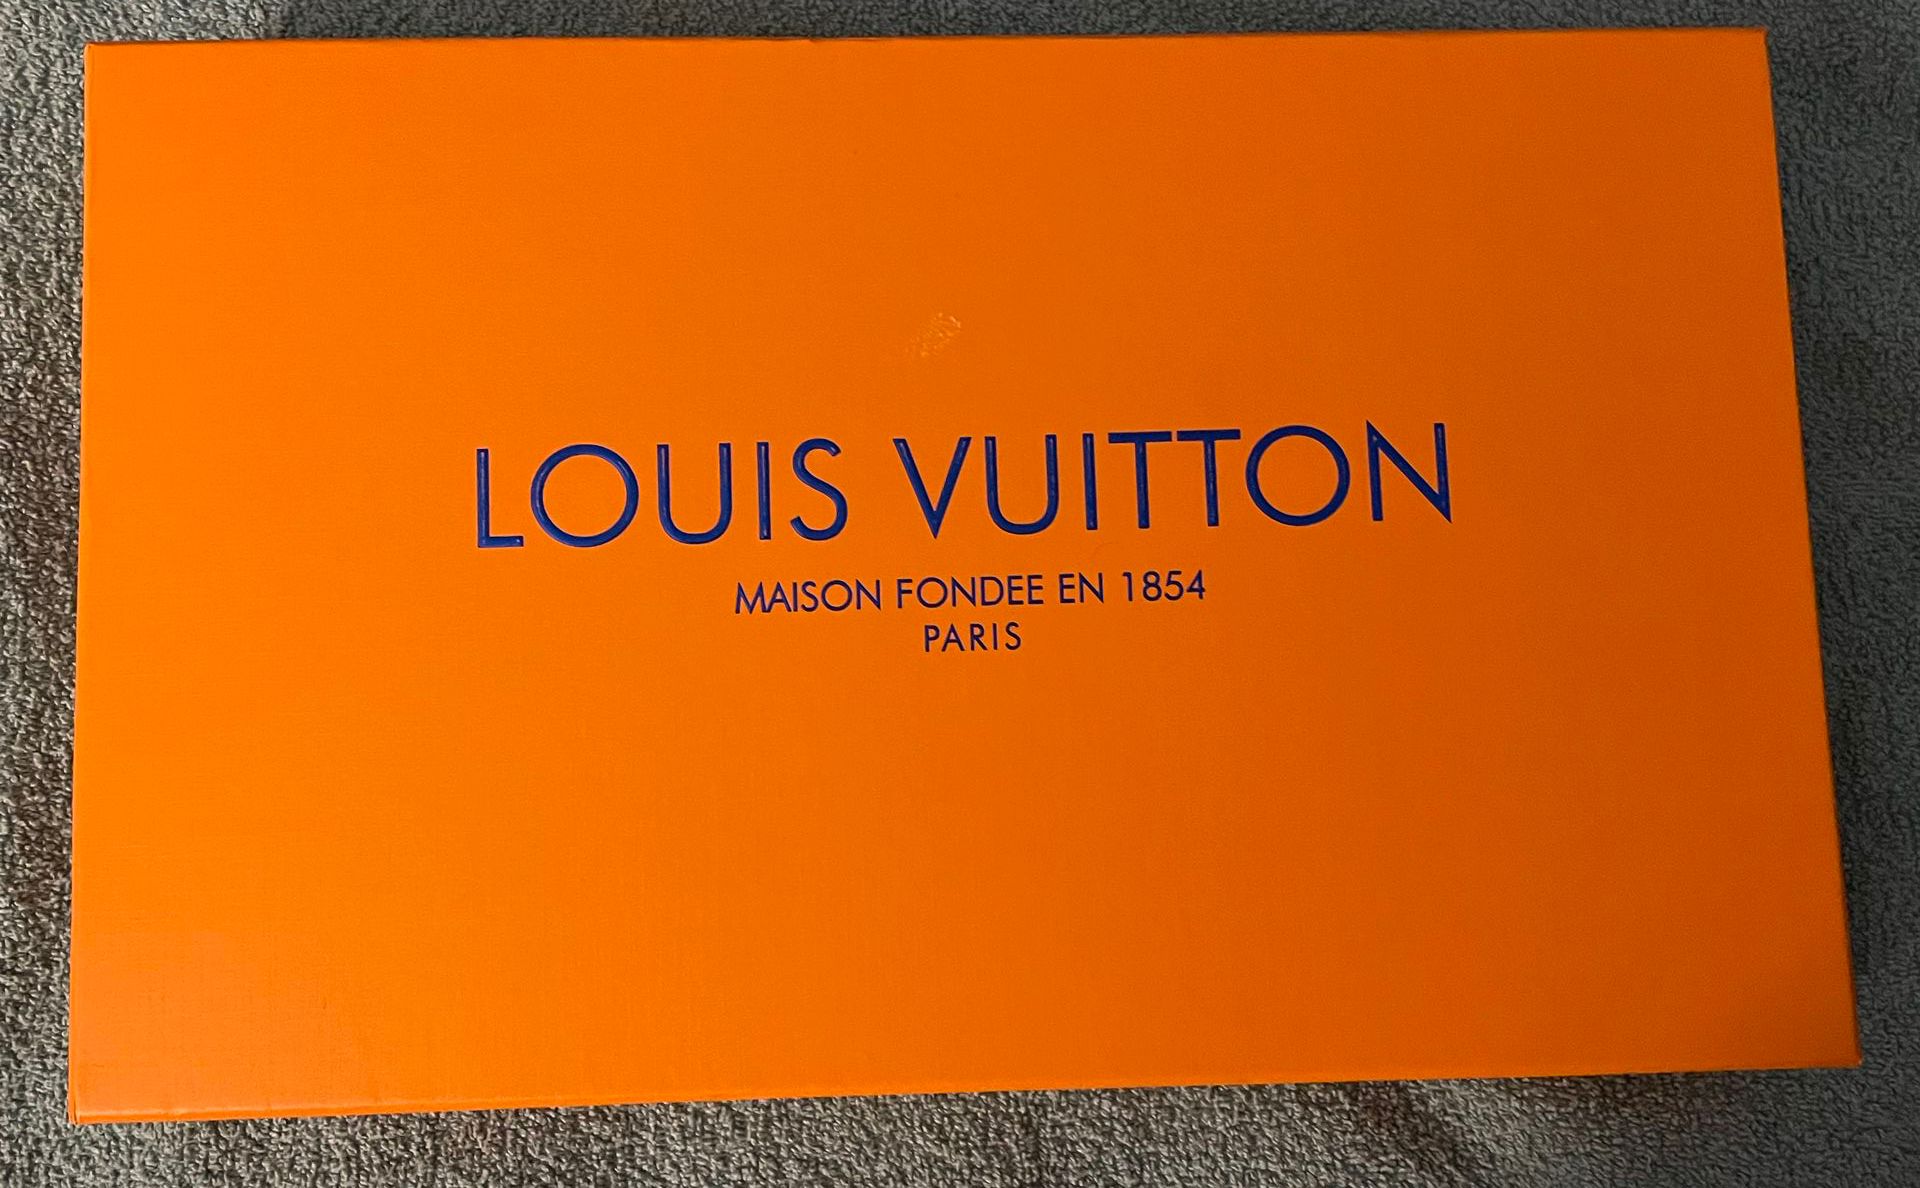 Brand new Louis Vuitton cashmere scarf